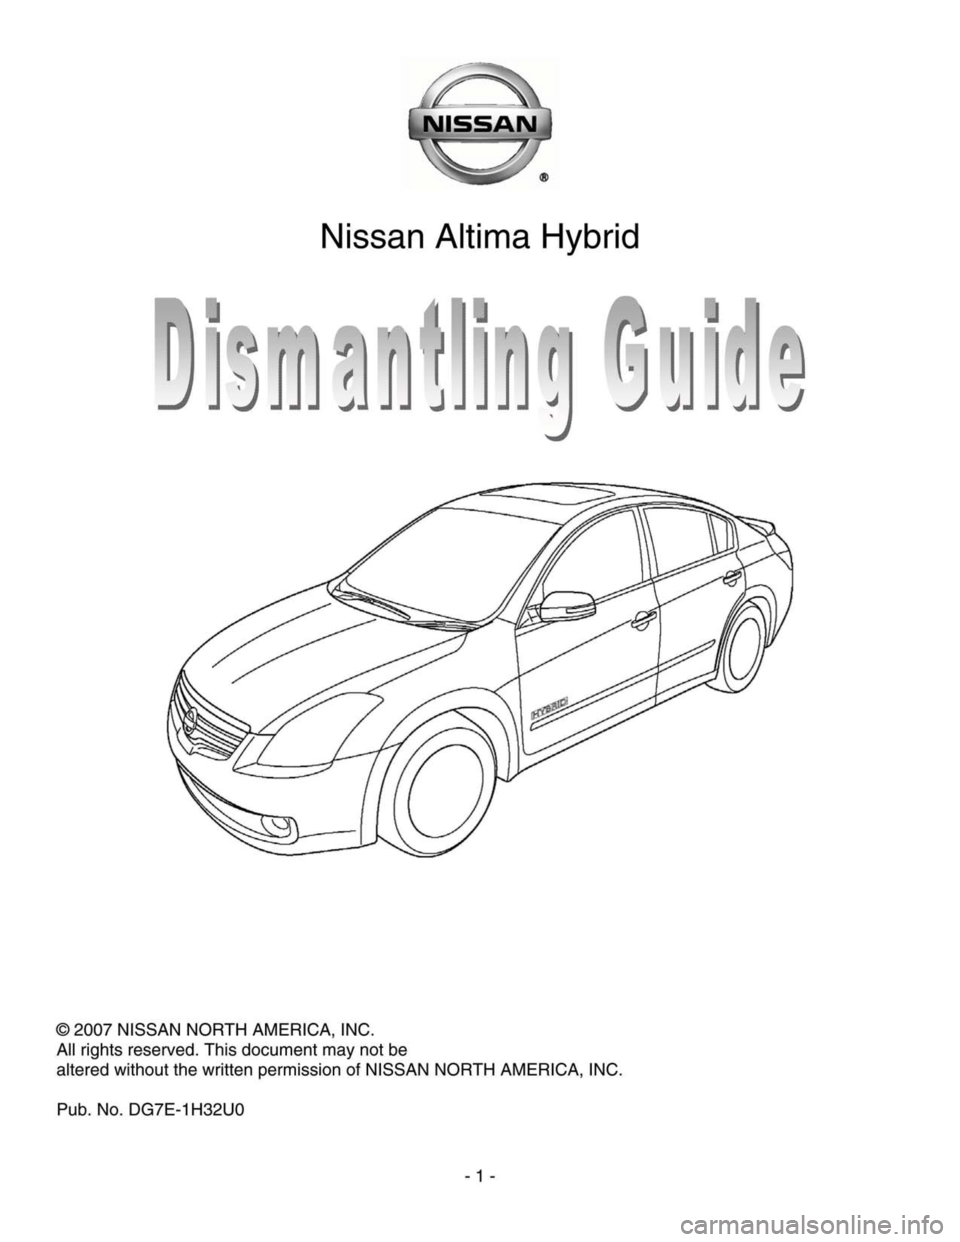 NISSAN ALTIMA HYBRID 2007 L32A / 4.G Dismantling Guide 